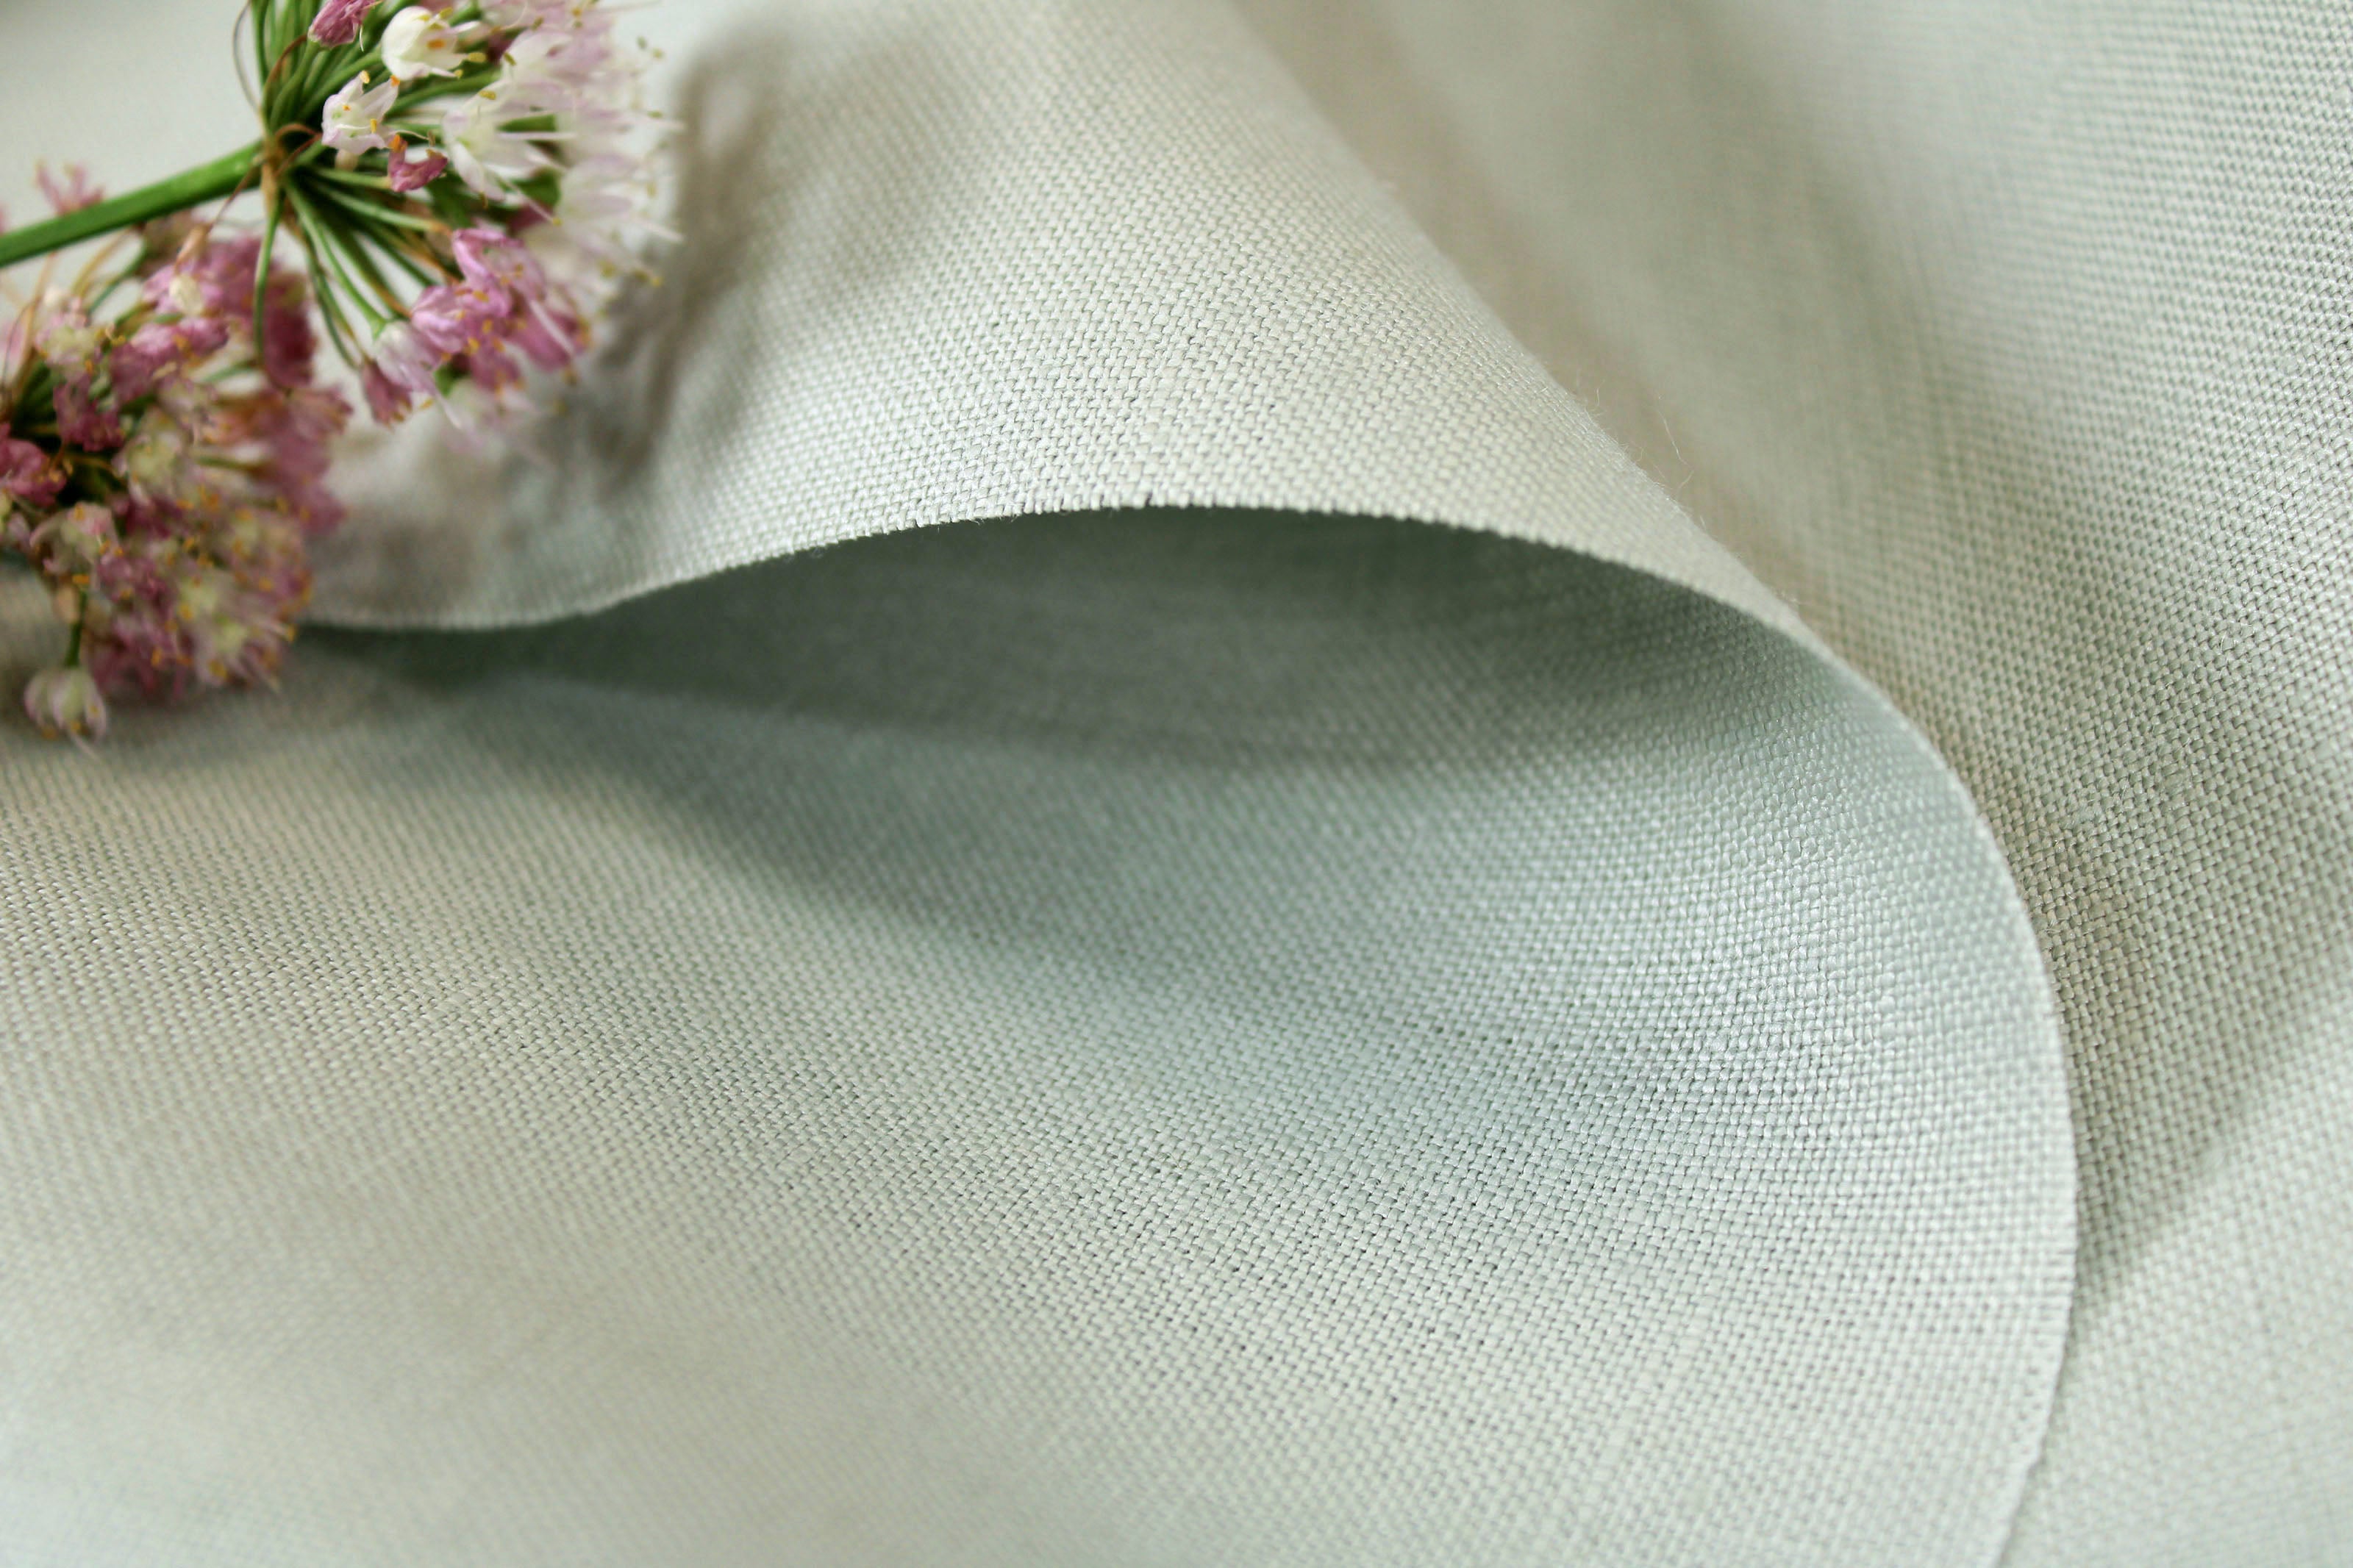 Premium IRISH 100% Linen Fabric by the Yard / Light gray Linen Fabric / Buy Linen Online